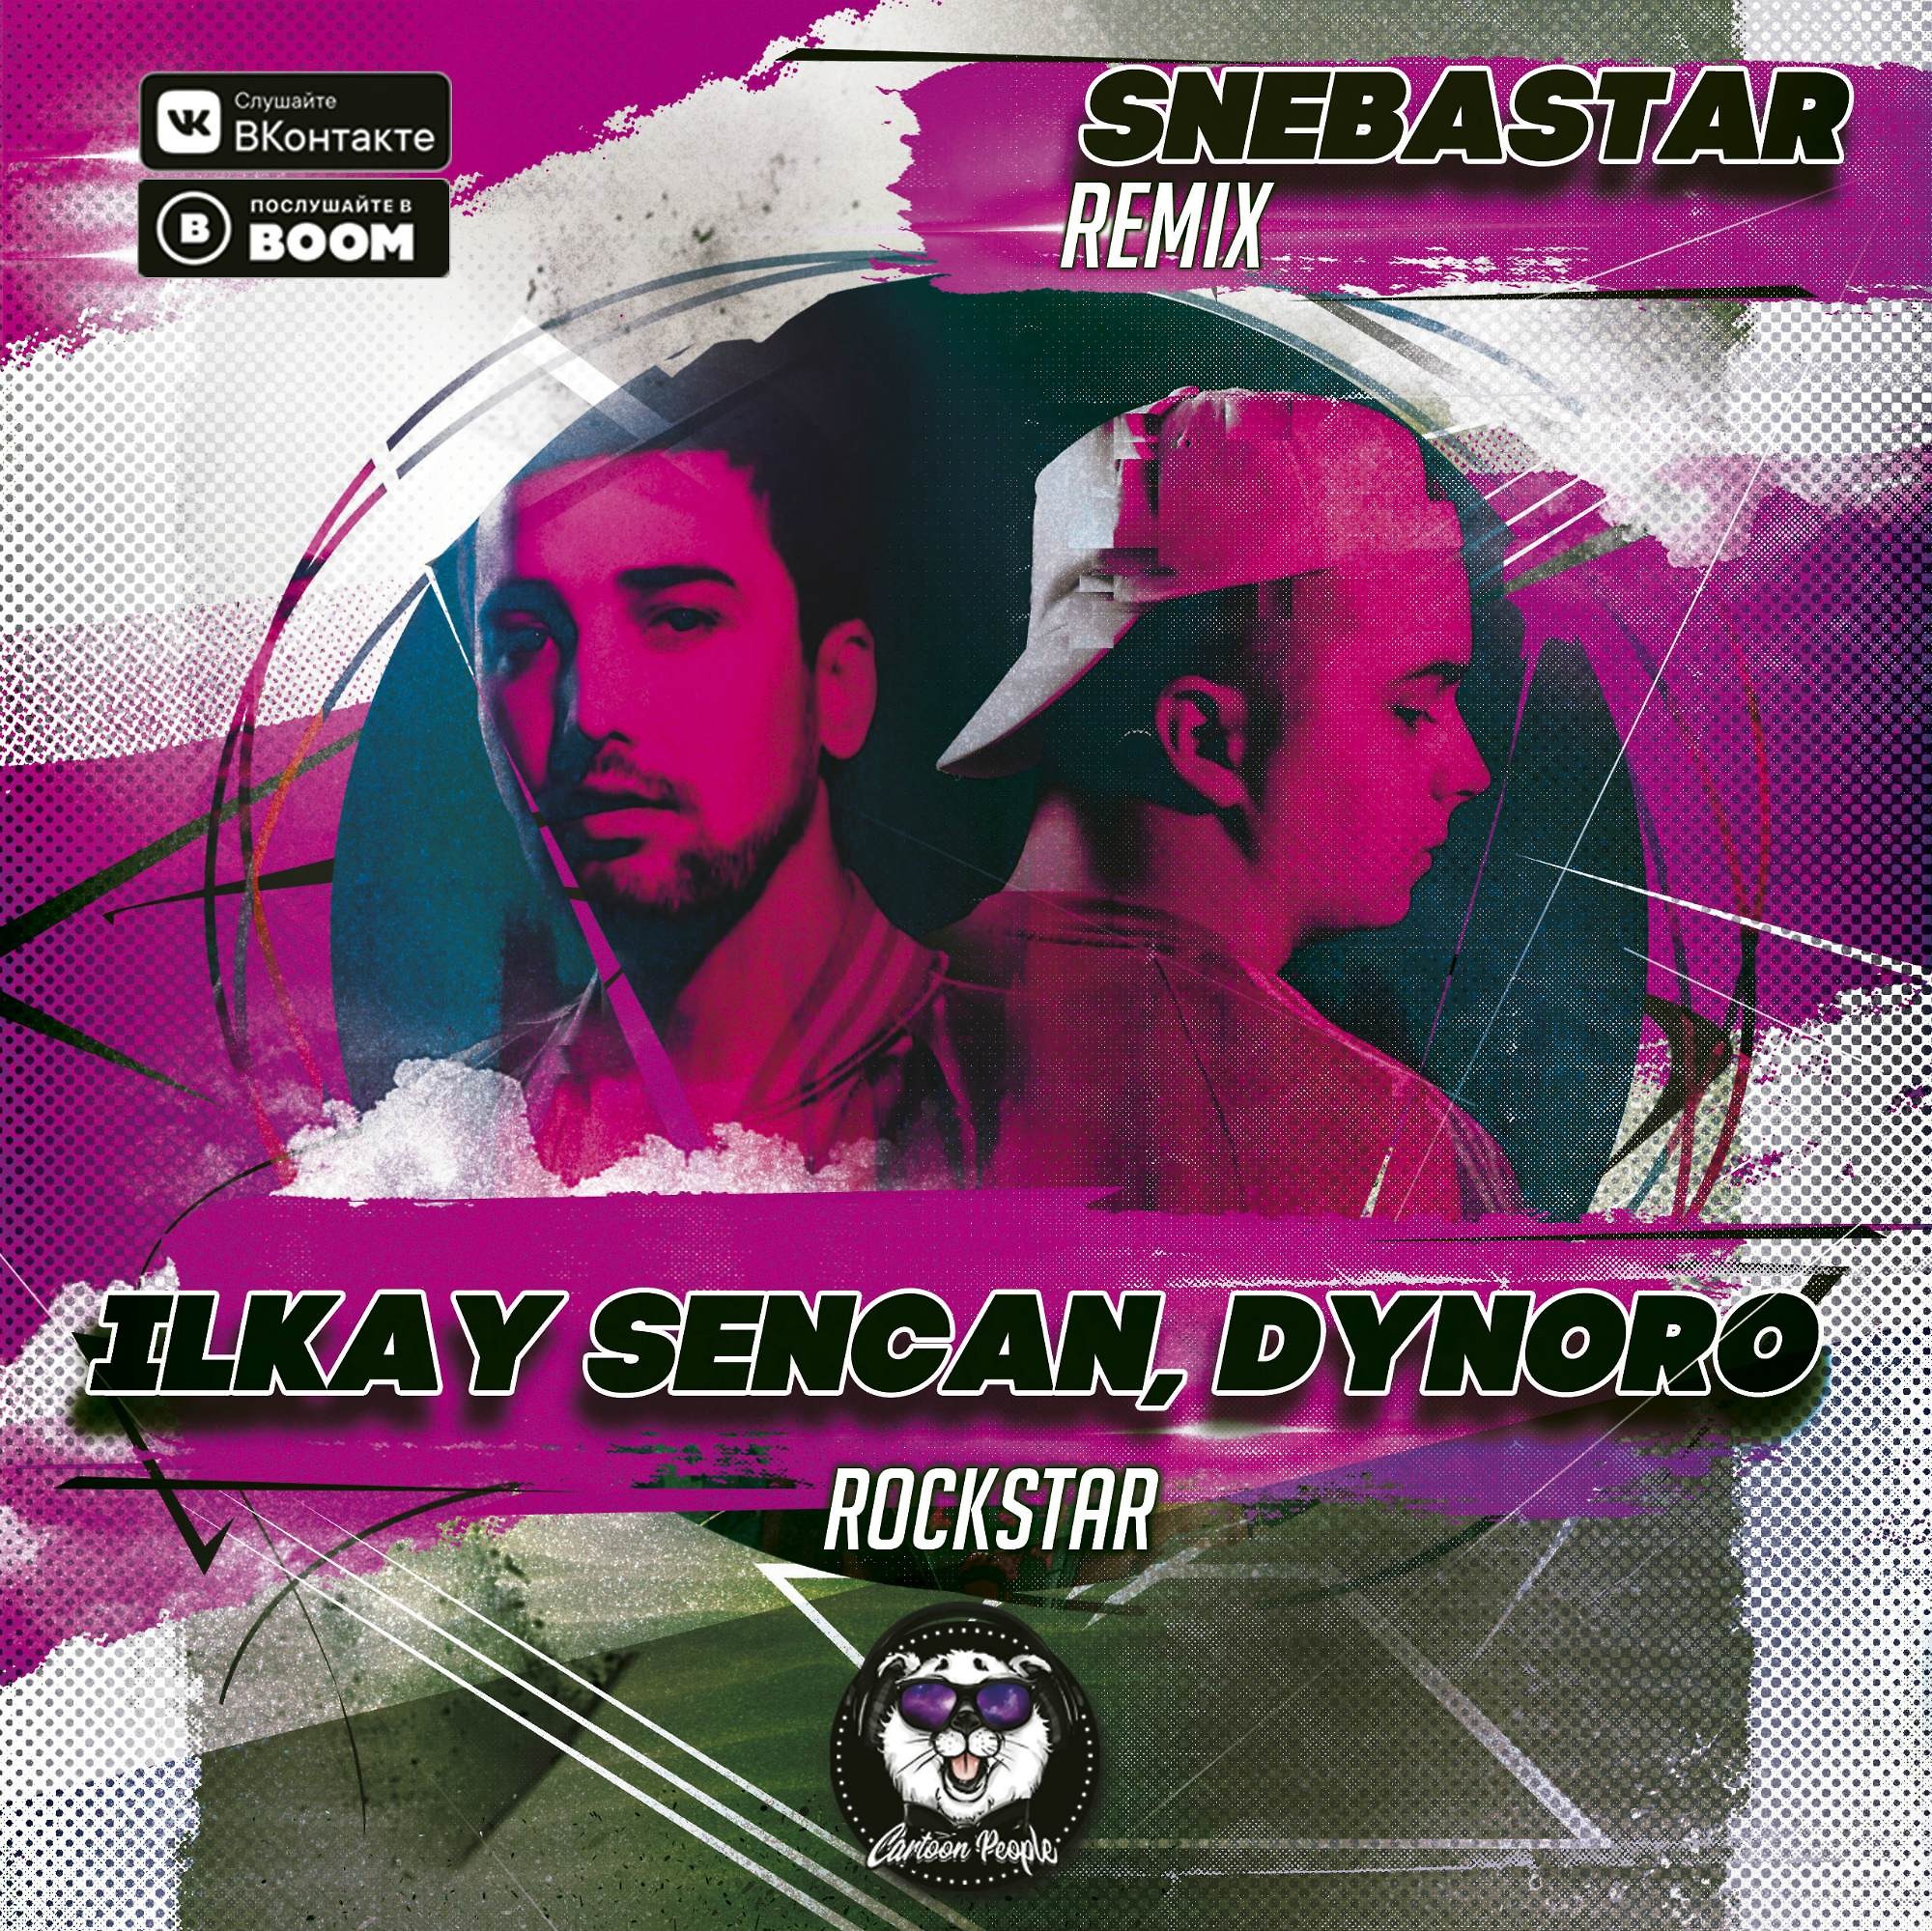 Remix mp 3. Dynoro Rockstar. Rockstar Ilkay Sencan. Ilkay Sencan-Rockstar (Ilkay Sencan Remix). Rockstar Dynoro Remix.